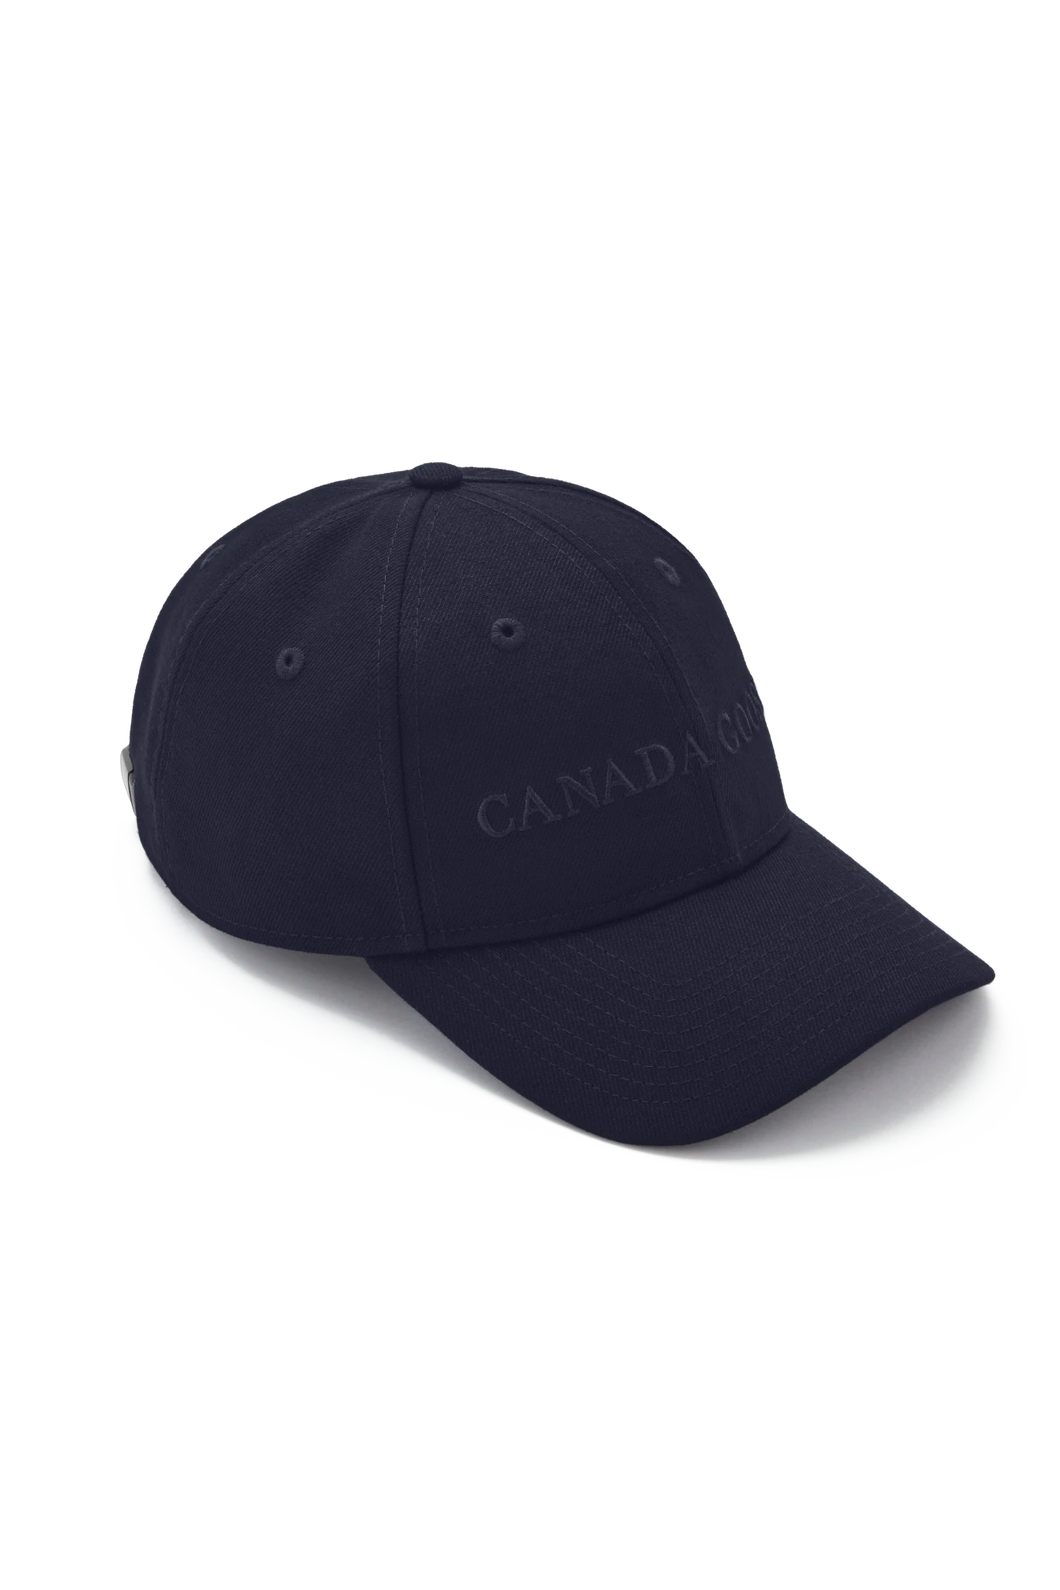 Men's | Canada Goose | 5426M | Wordmark Adjustable Cap | Black